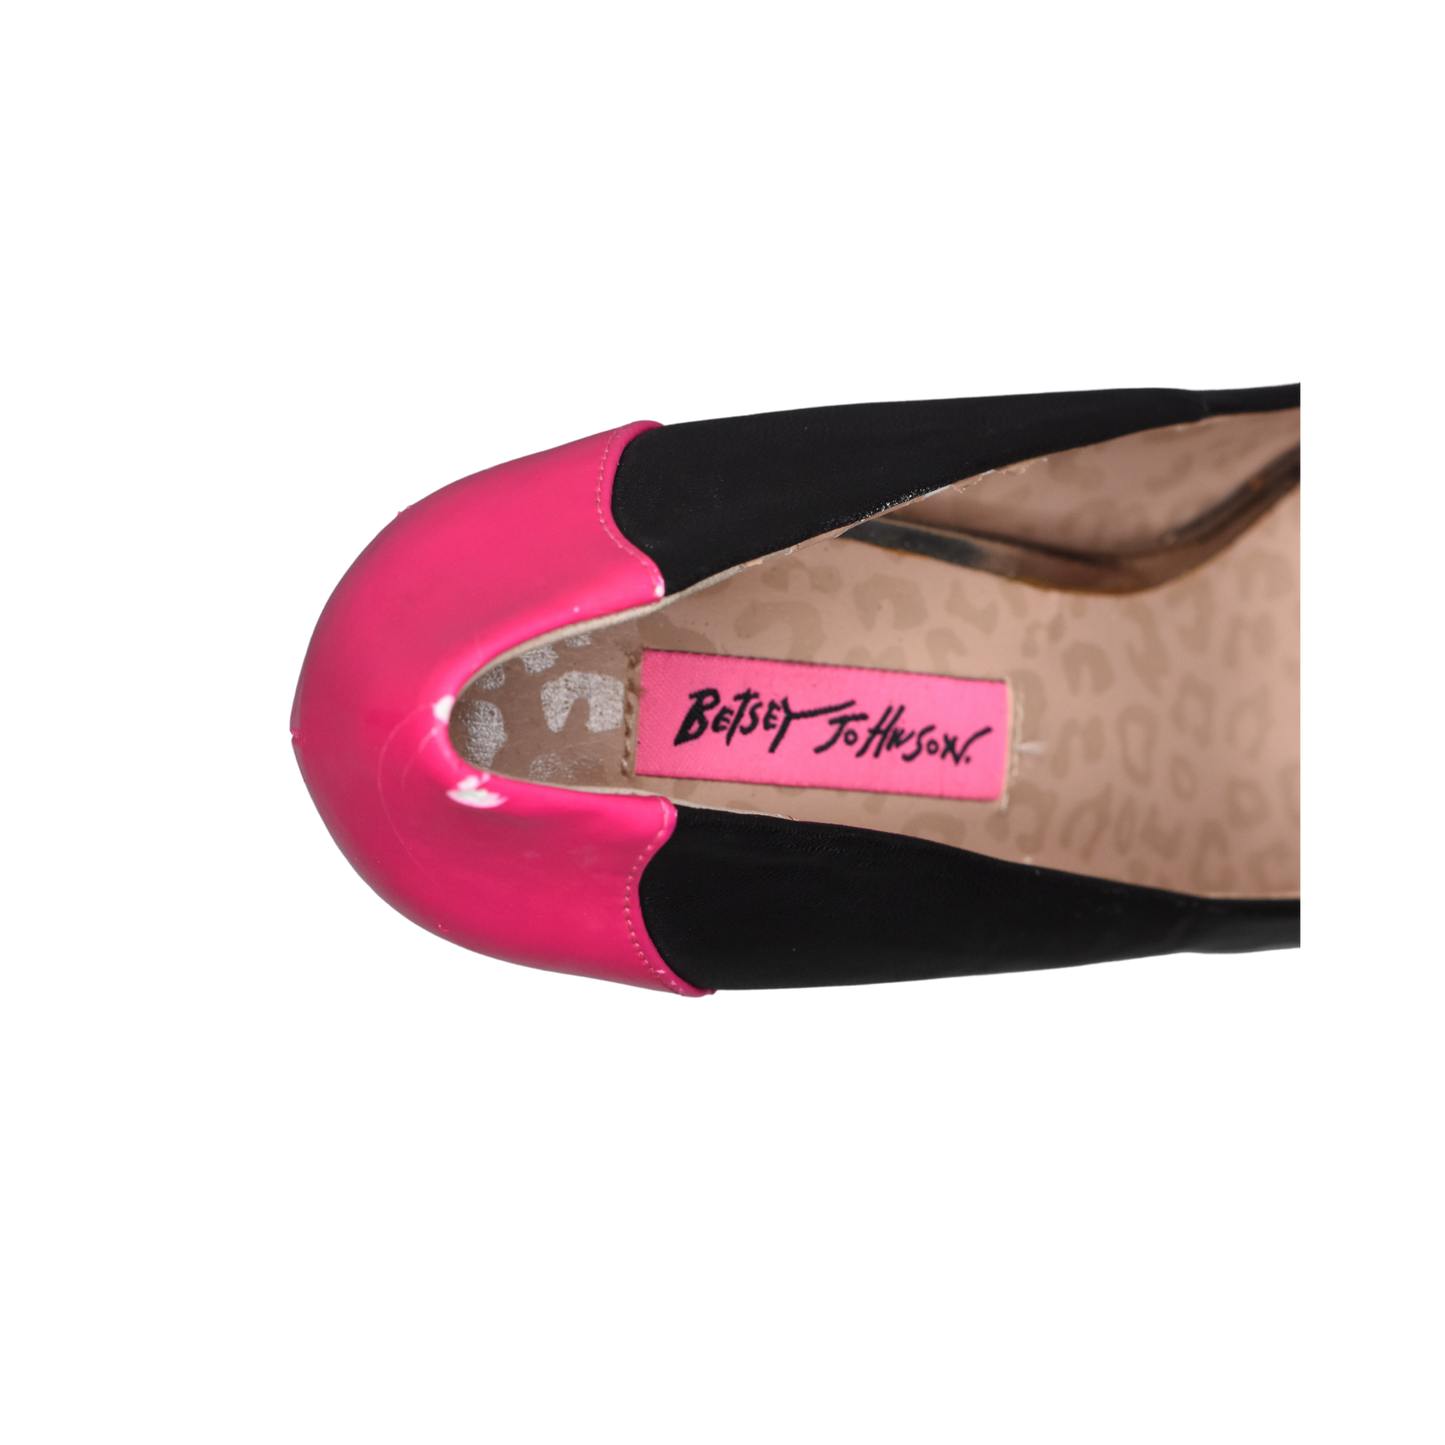 Betsey Johnson High Heels Closed-Toe Pumps Pink, Black Size 8M SKU 000192-6